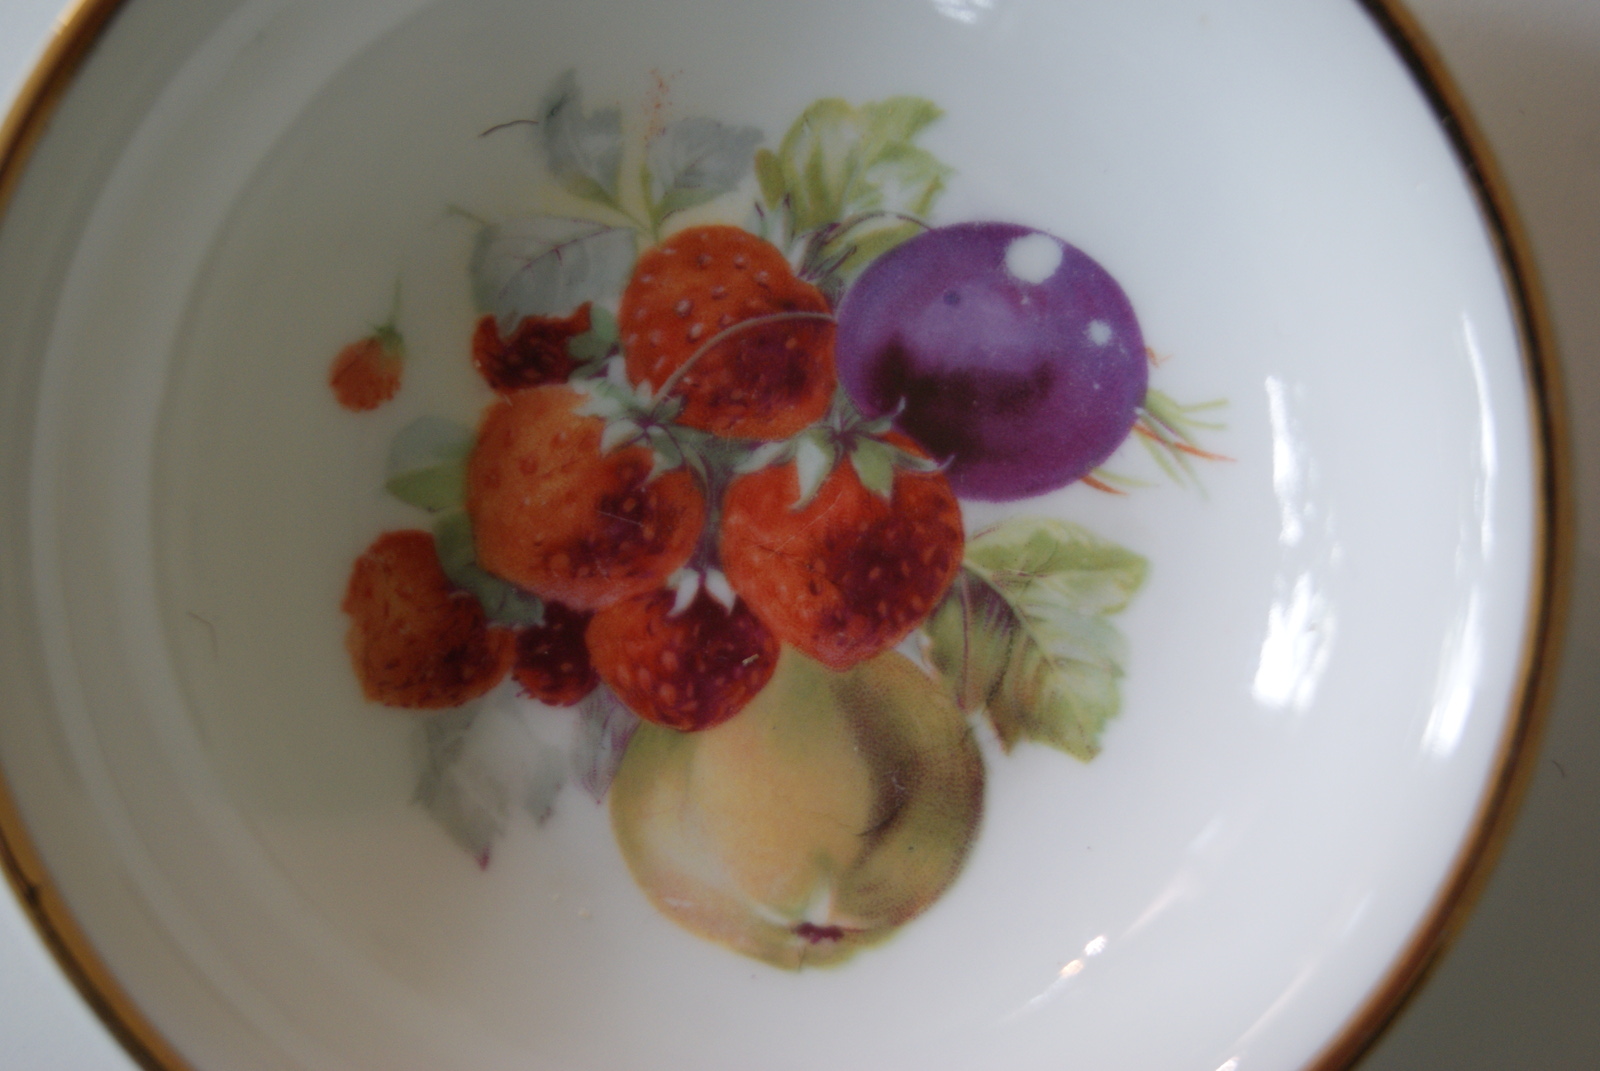 Porsgrund dessertskål med frukt - plommer, pærer og jordbær